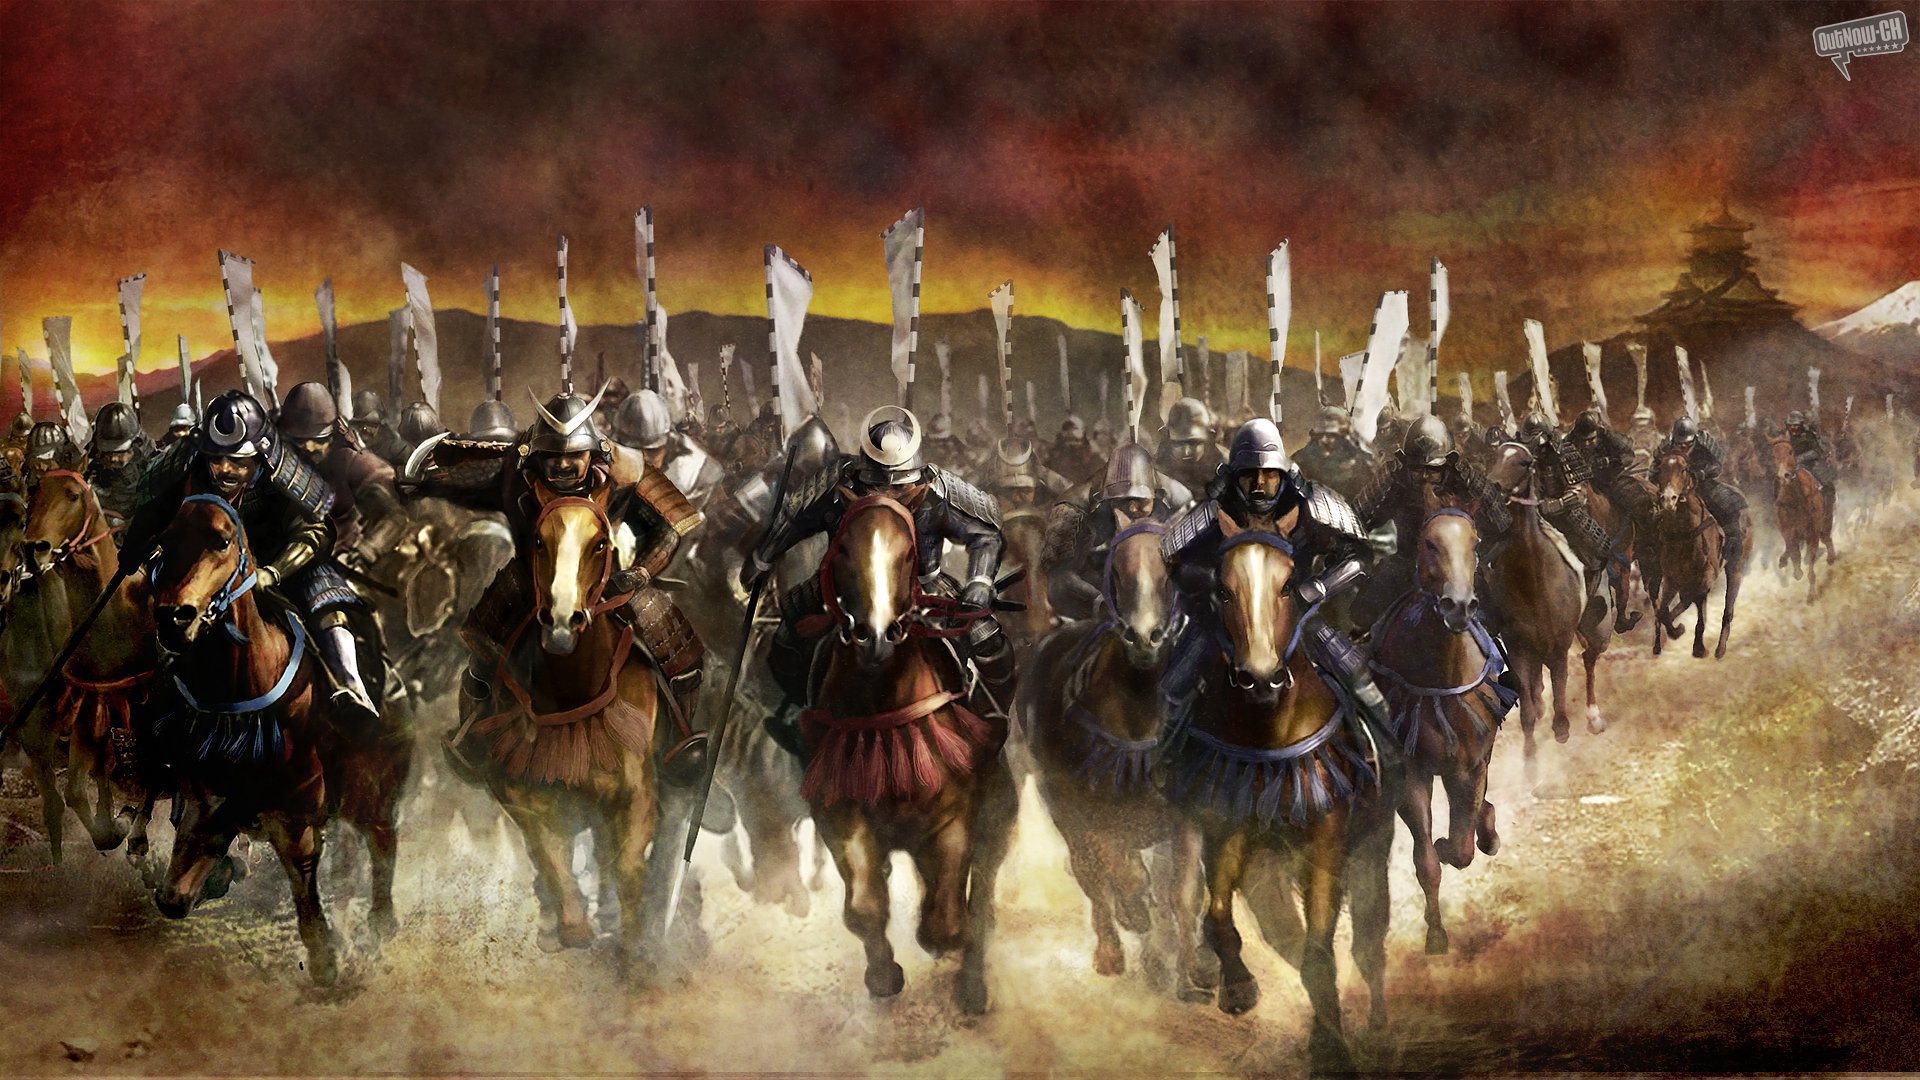 total black wallpaper,battle,strategy video game,conquistador,middle ages,horse